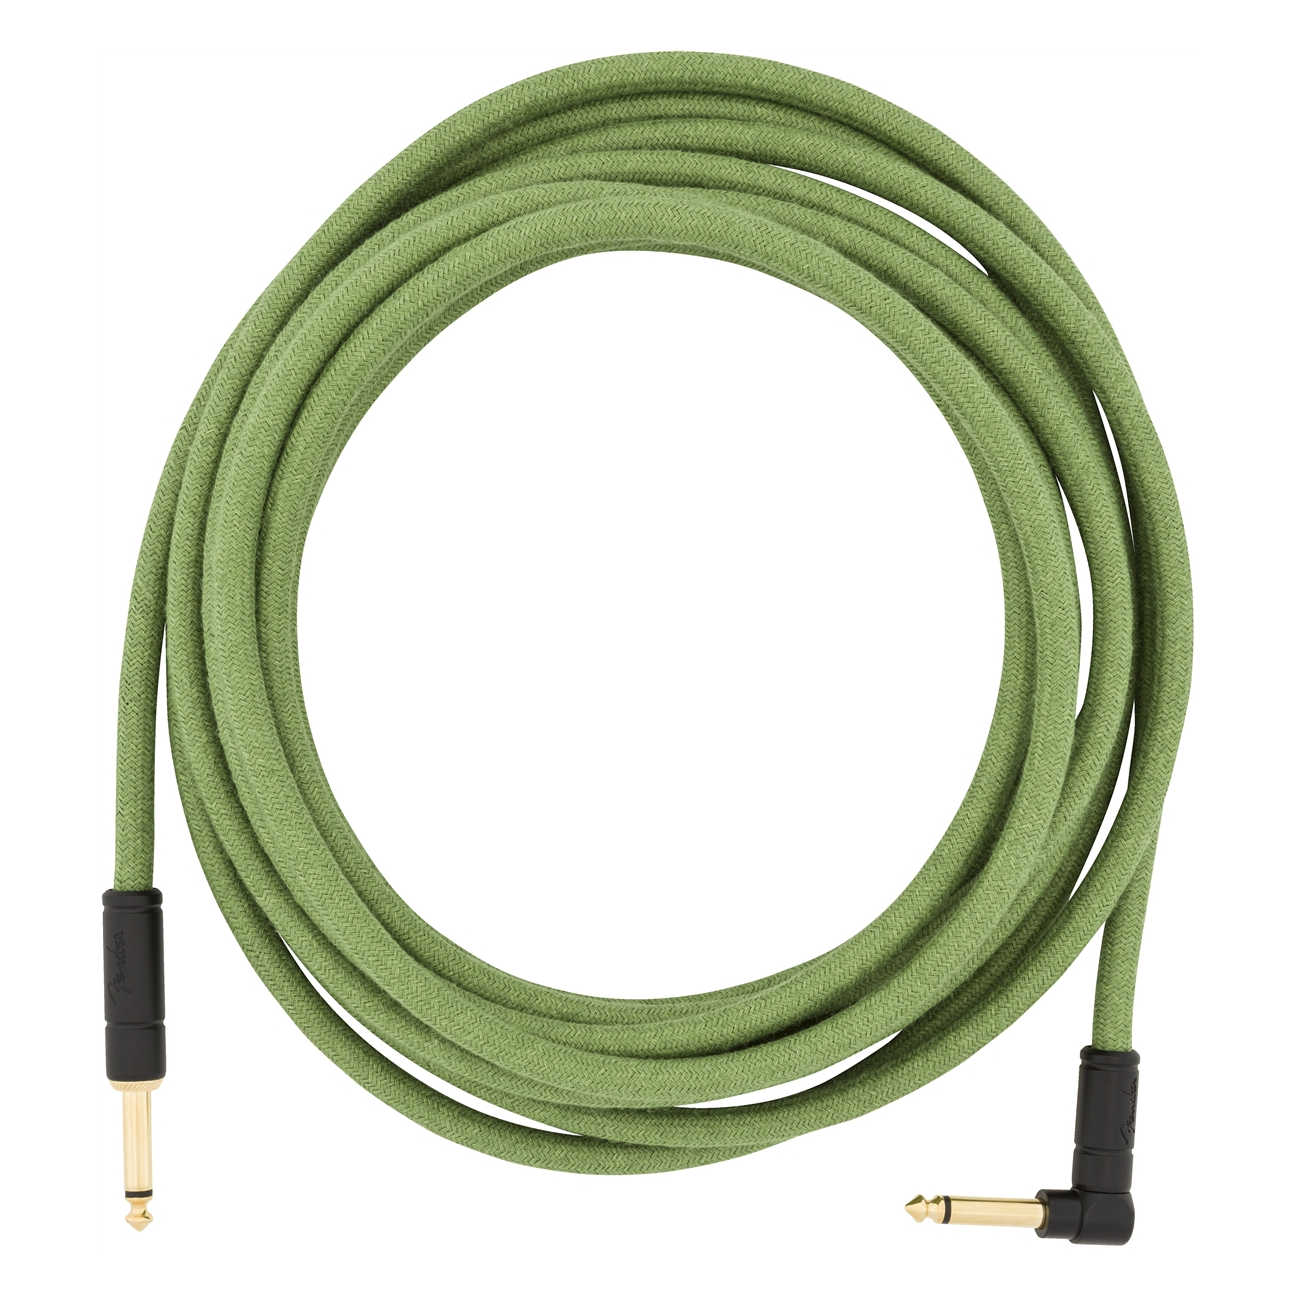 Fender Festival Hemp Instrument Cables,18.6 FT,Green